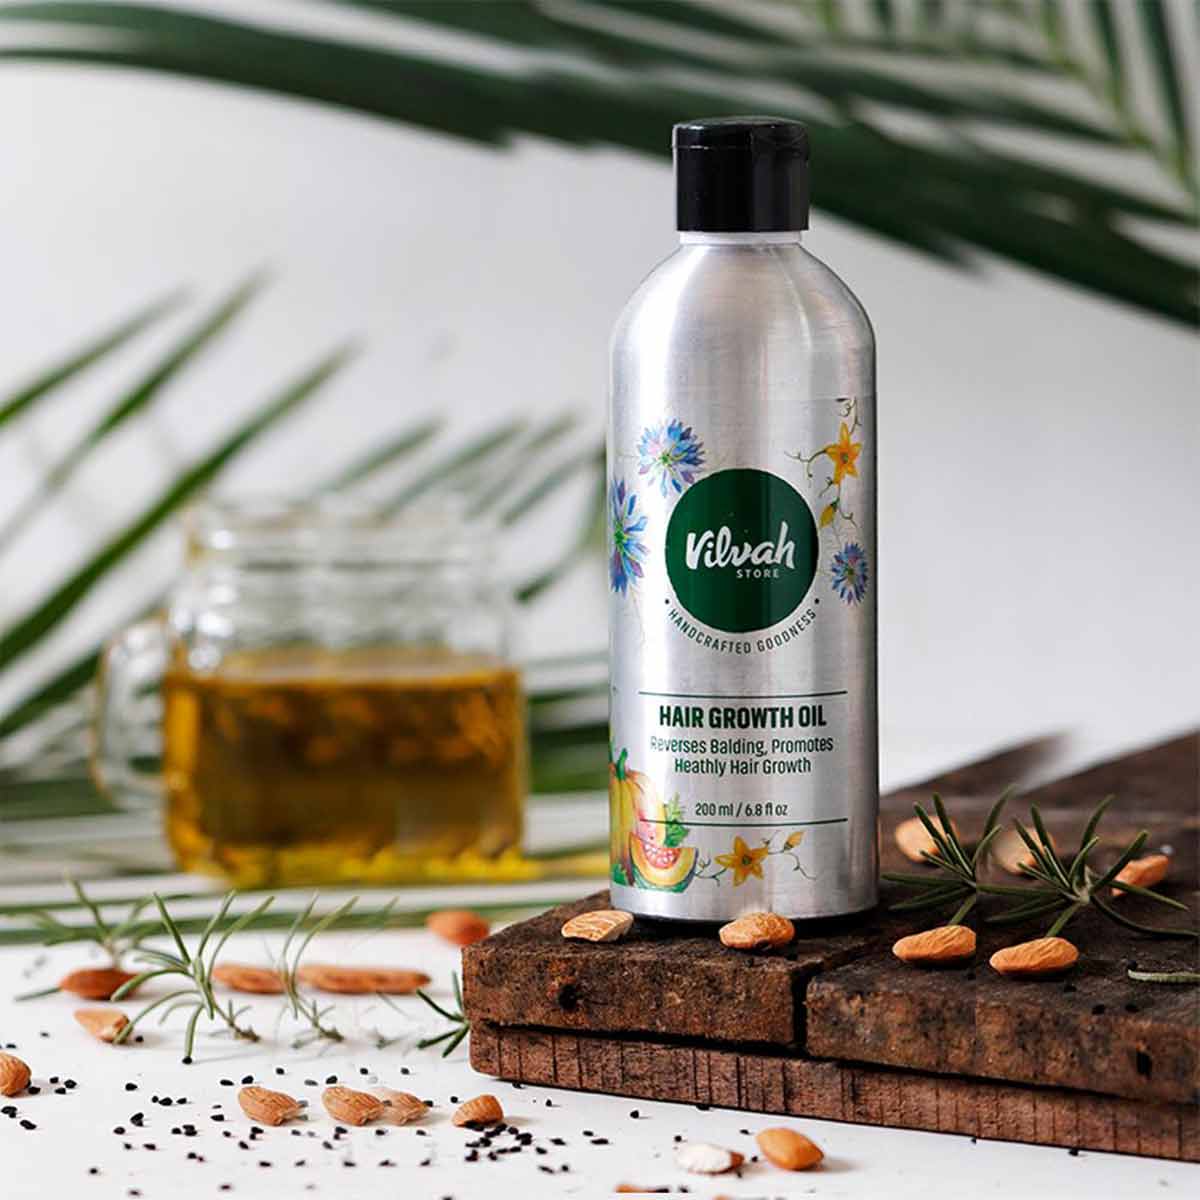 Vilvah Store Herbal Shampoo (Dandruff Control)